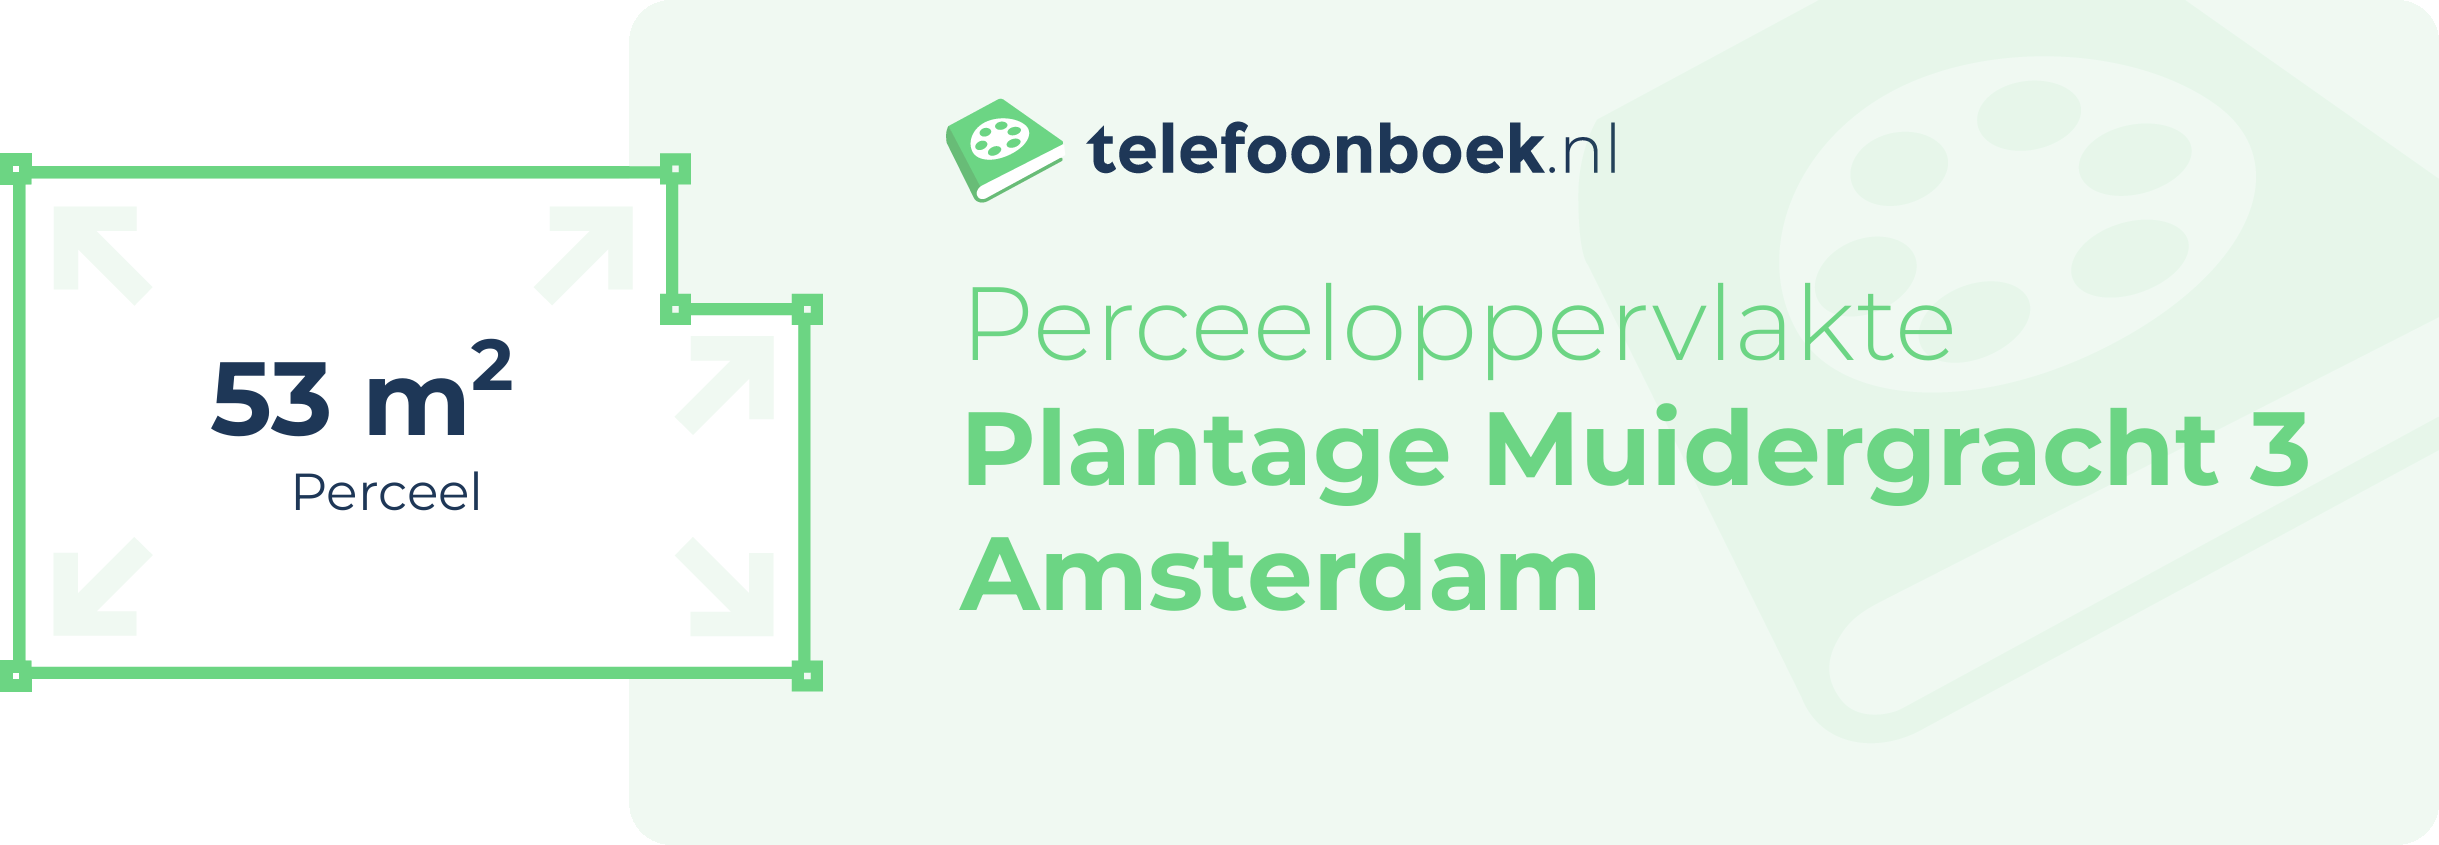 Perceeloppervlakte Plantage Muidergracht 3 Amsterdam